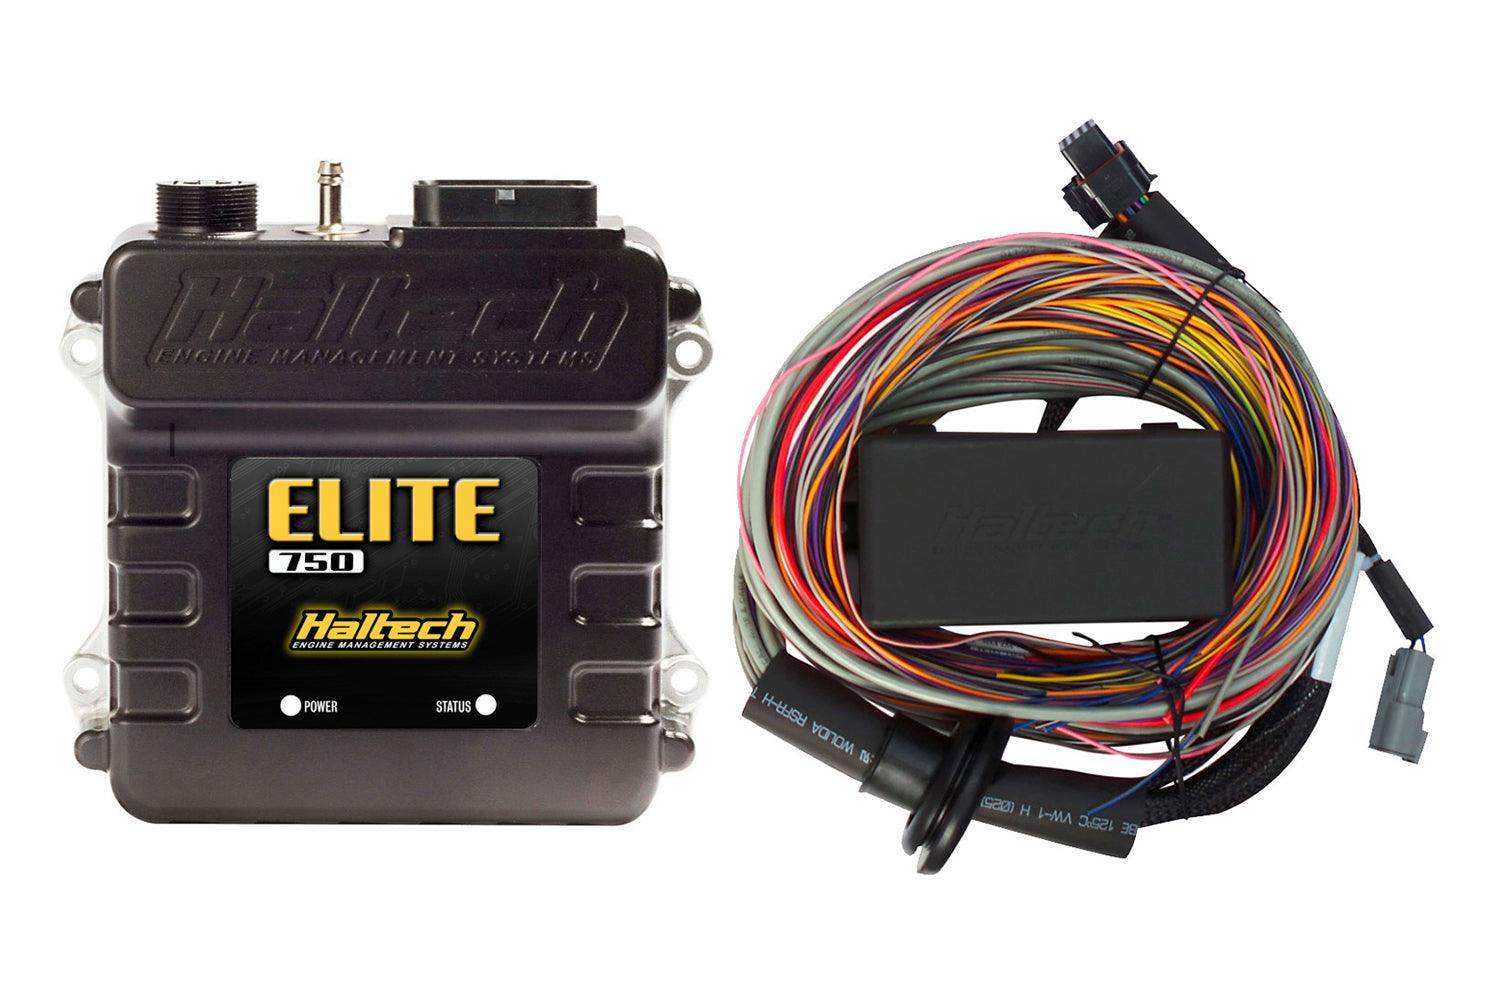 HT-150605 - Elite 750 +Premium Universal Wire-in Harness Kit